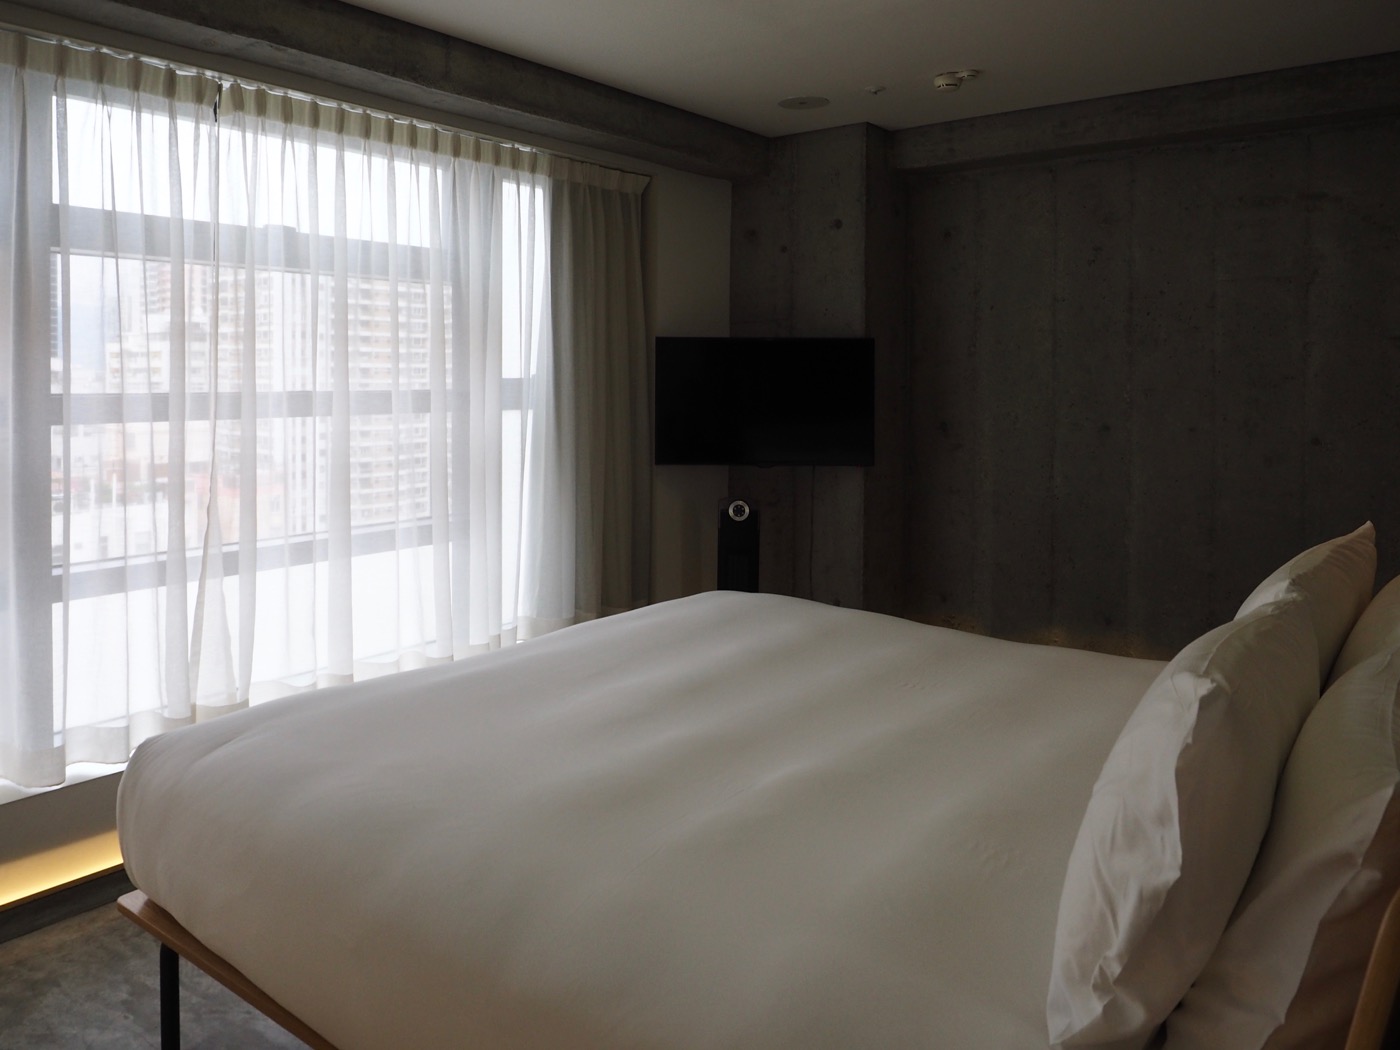 香港住宿 天后 Tuve Hotel 冷冽清水模設計旅館 Black Premier Room - 一口冒險 Bitesized Adventure